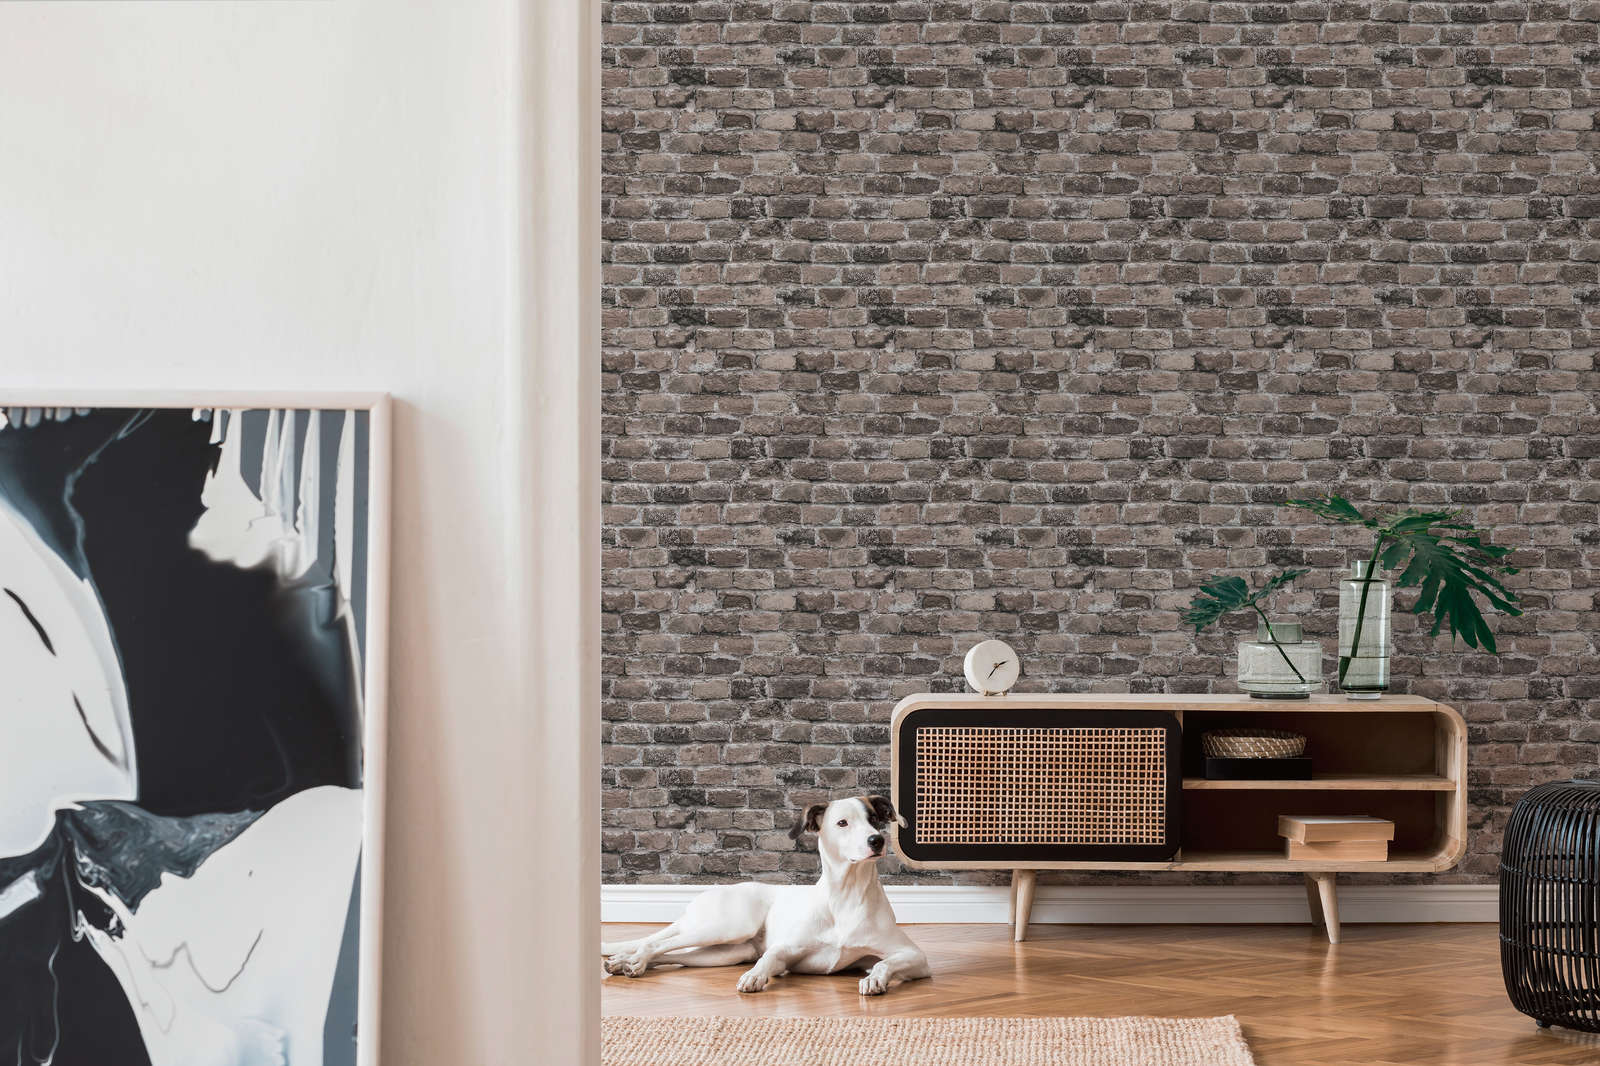             Brick wall non-woven wallpaper - grey, brown, beige
        